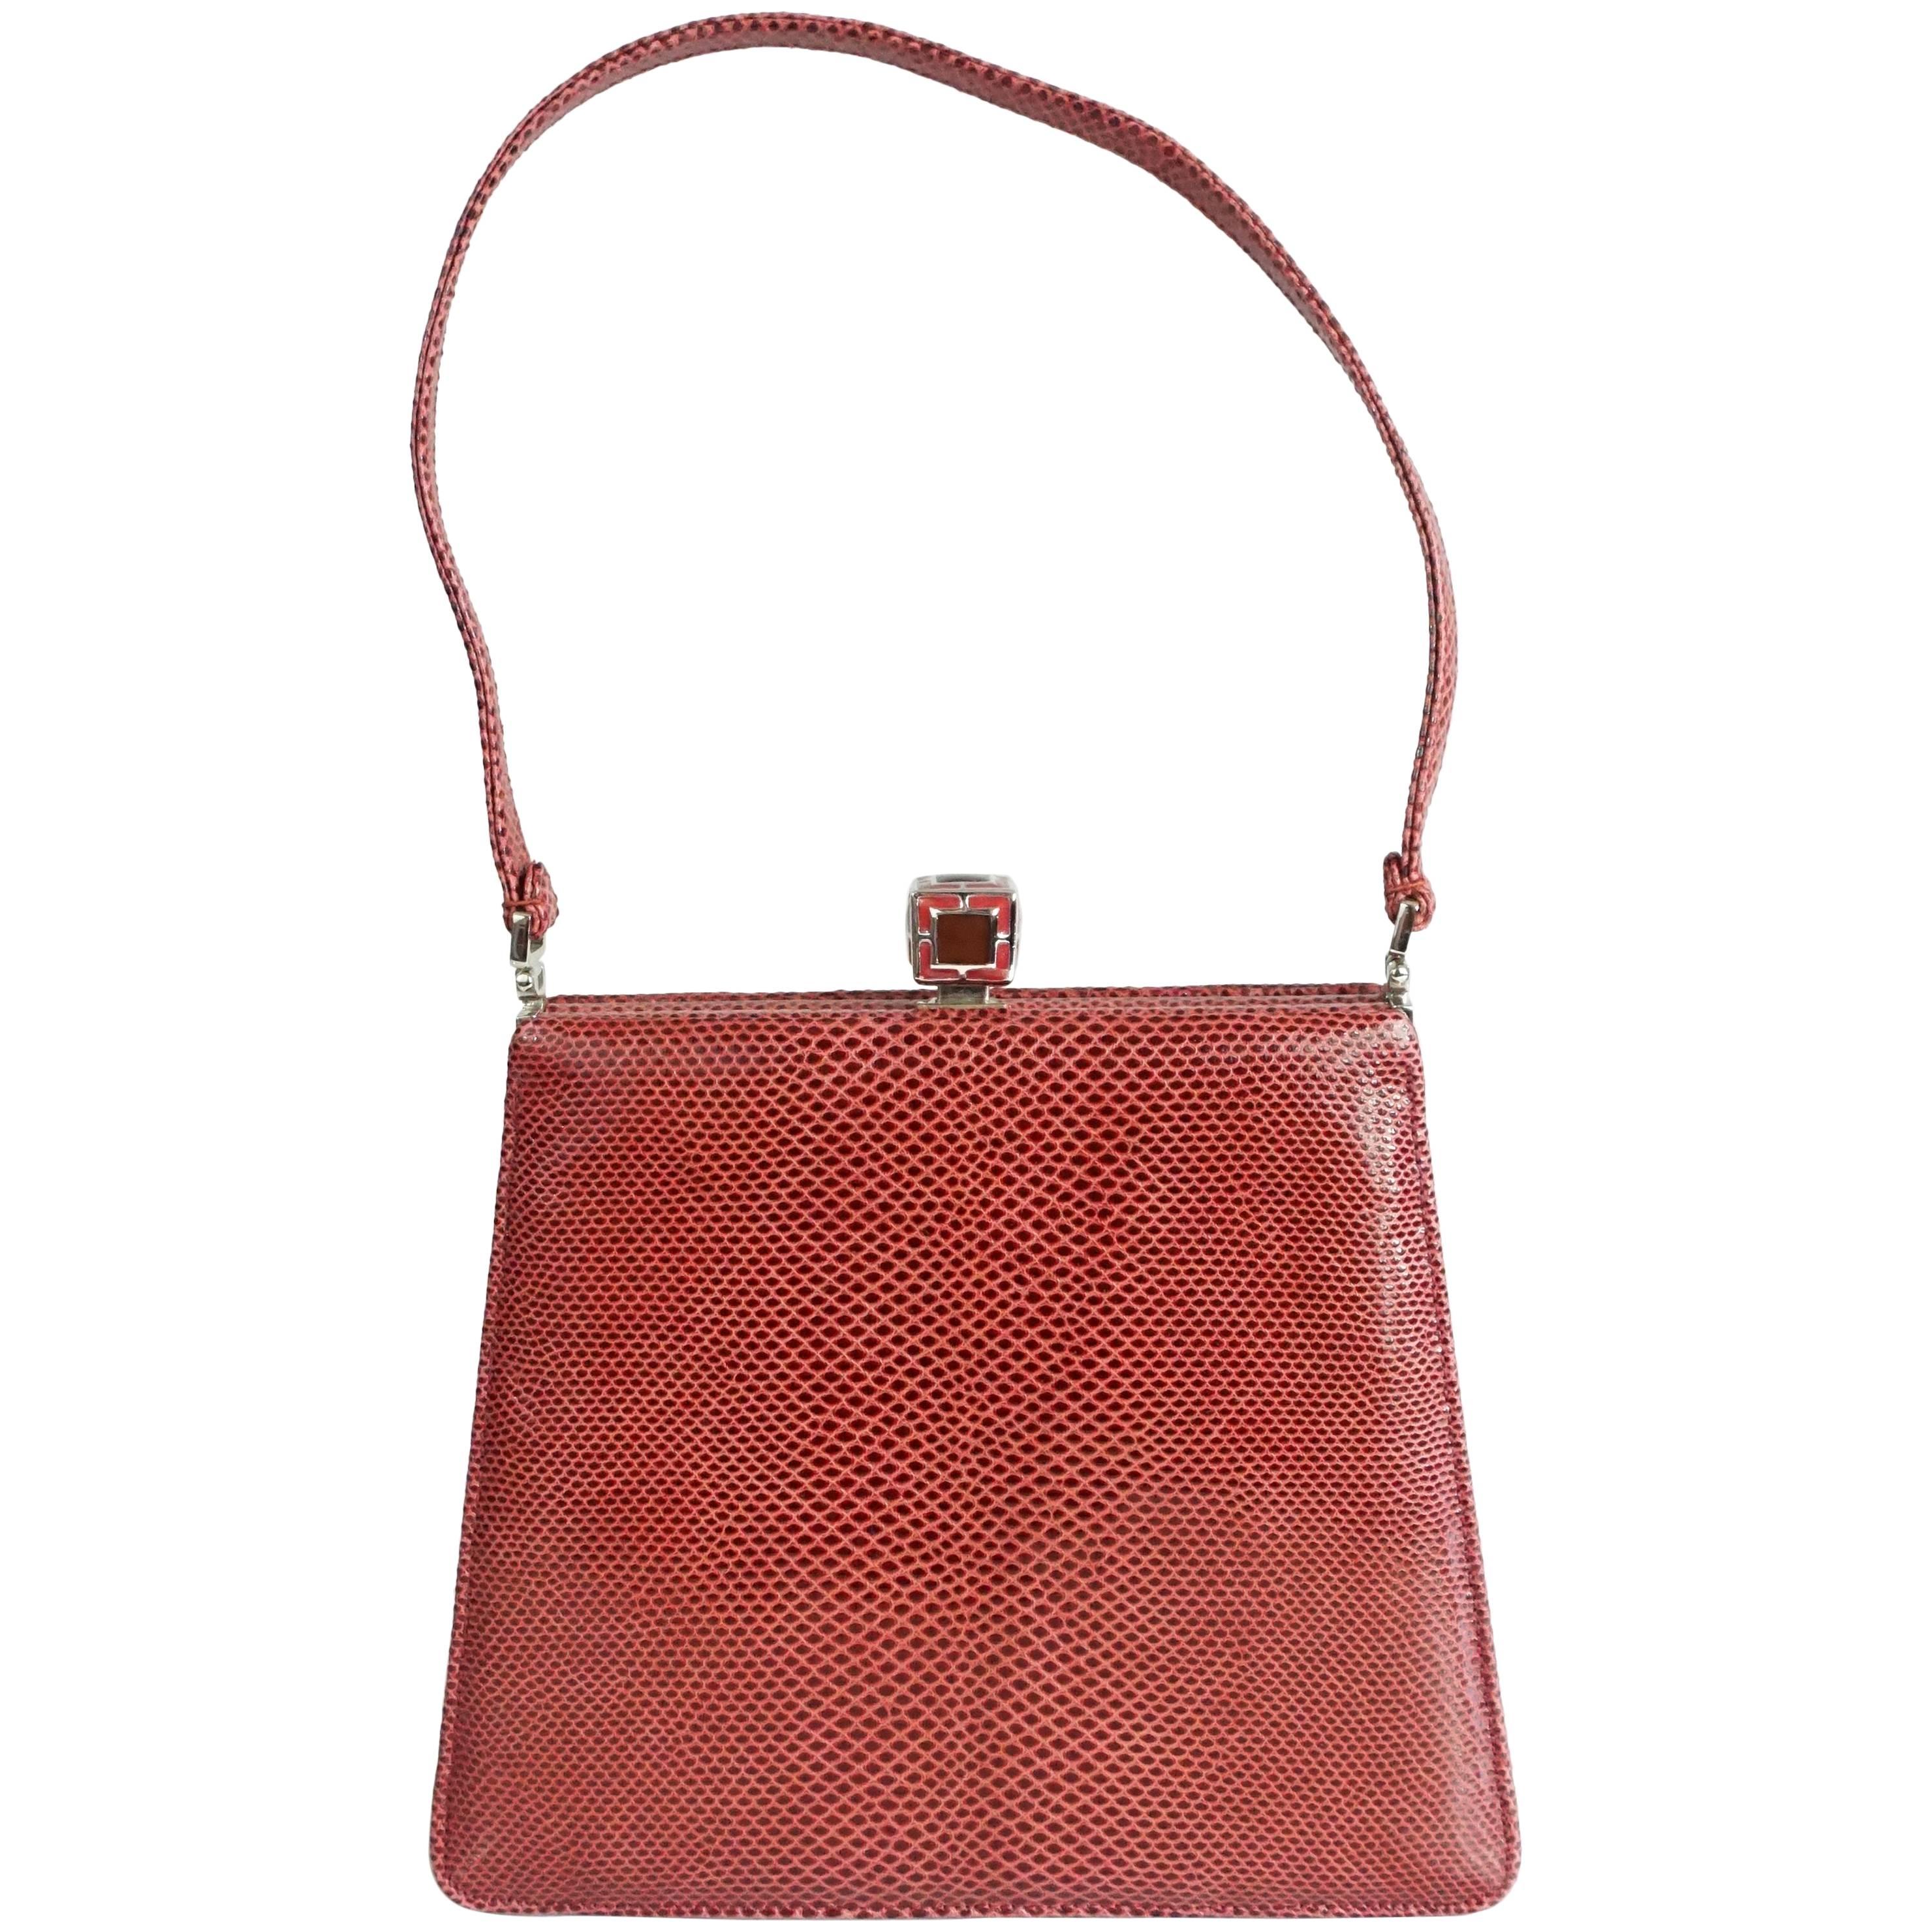 Judith Leiber Deep Red Lizard Top Handle Handbag - SHW For Sale